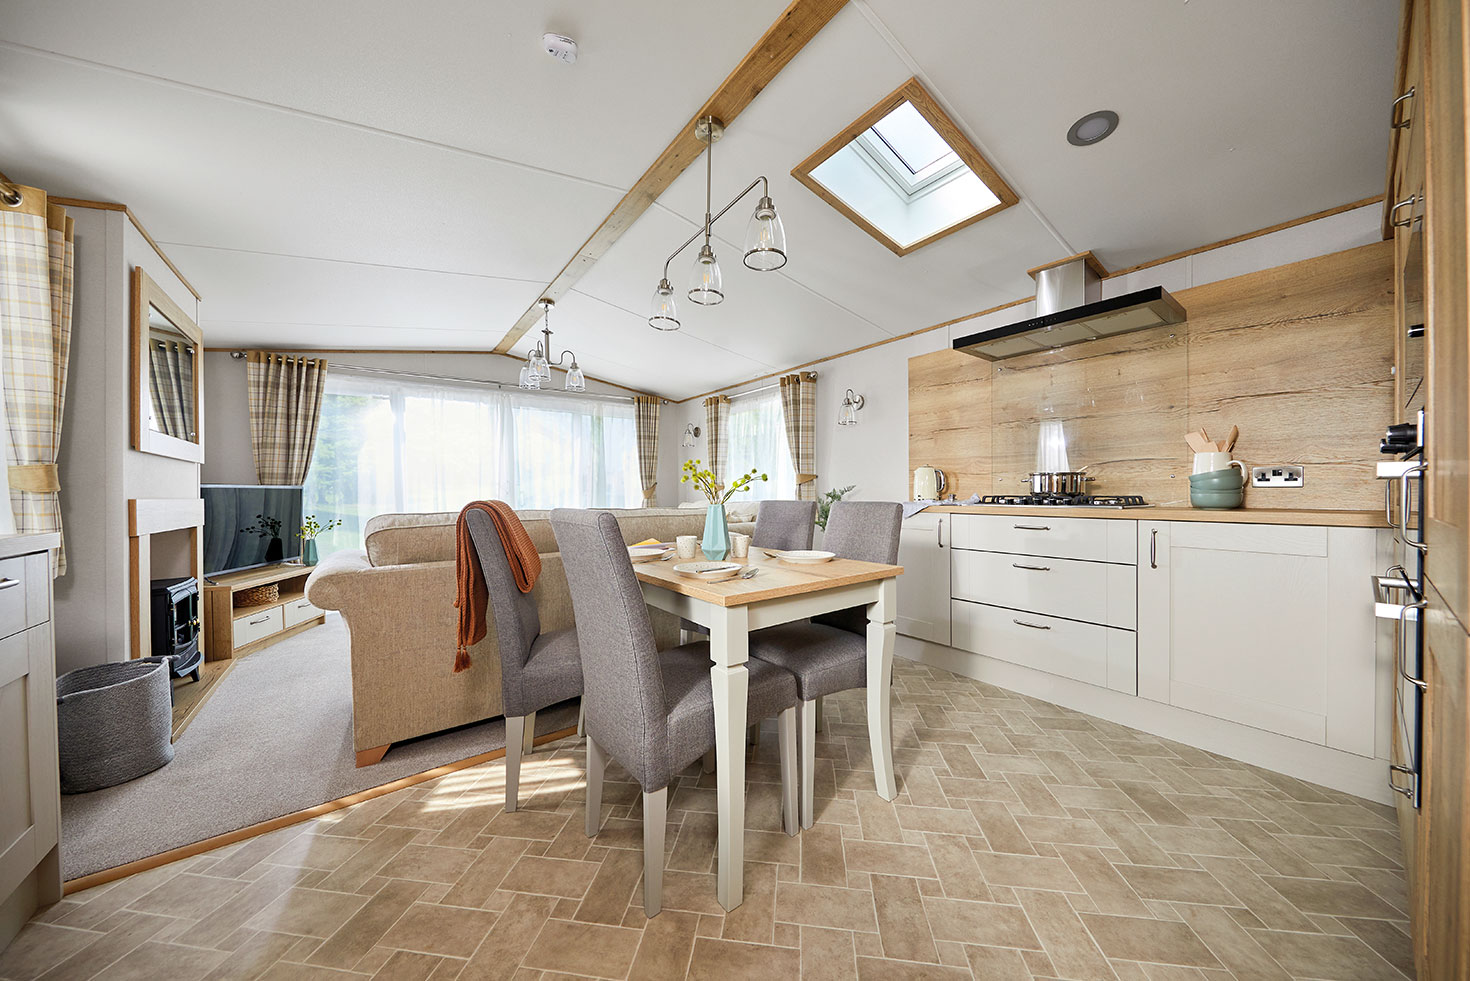 ABI Ambleside Premier 2022, brand new static caravan holiday lodge for sale Lake District